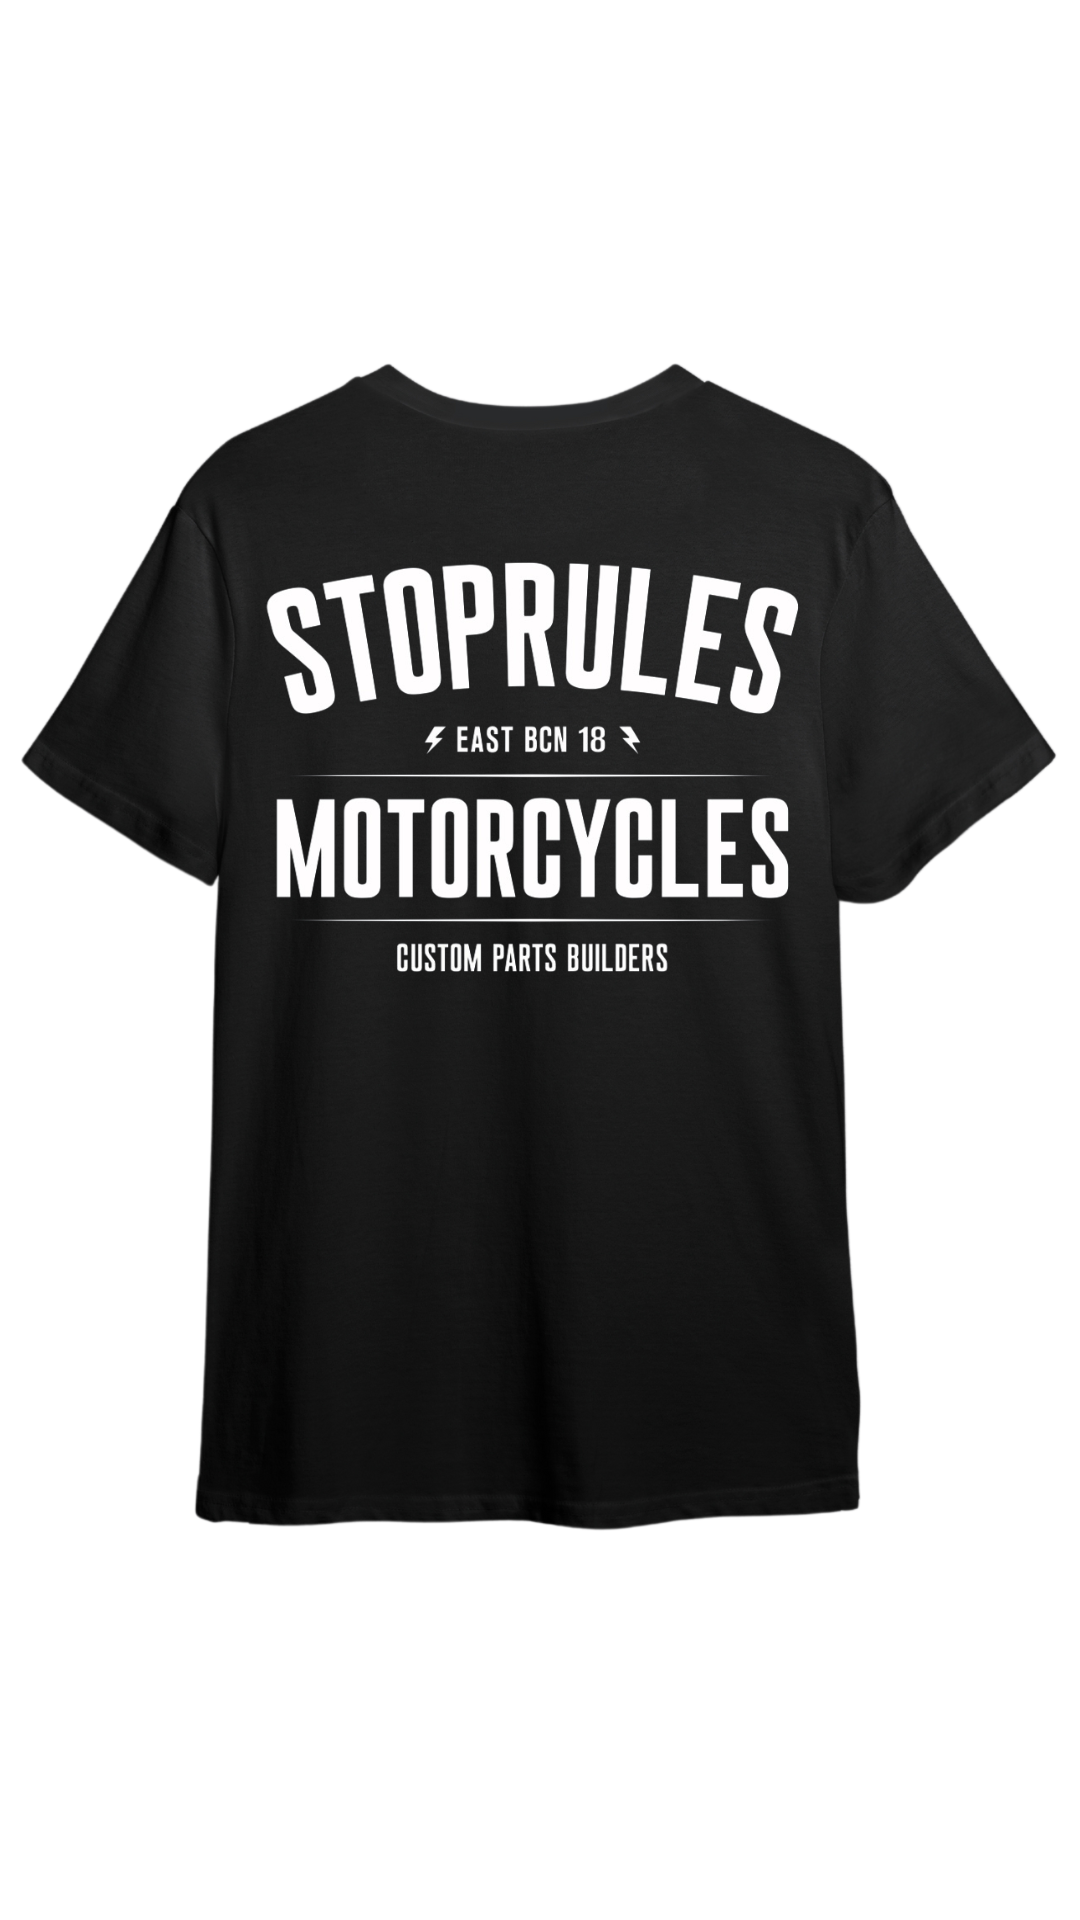 stop rules motorcycles tshirt